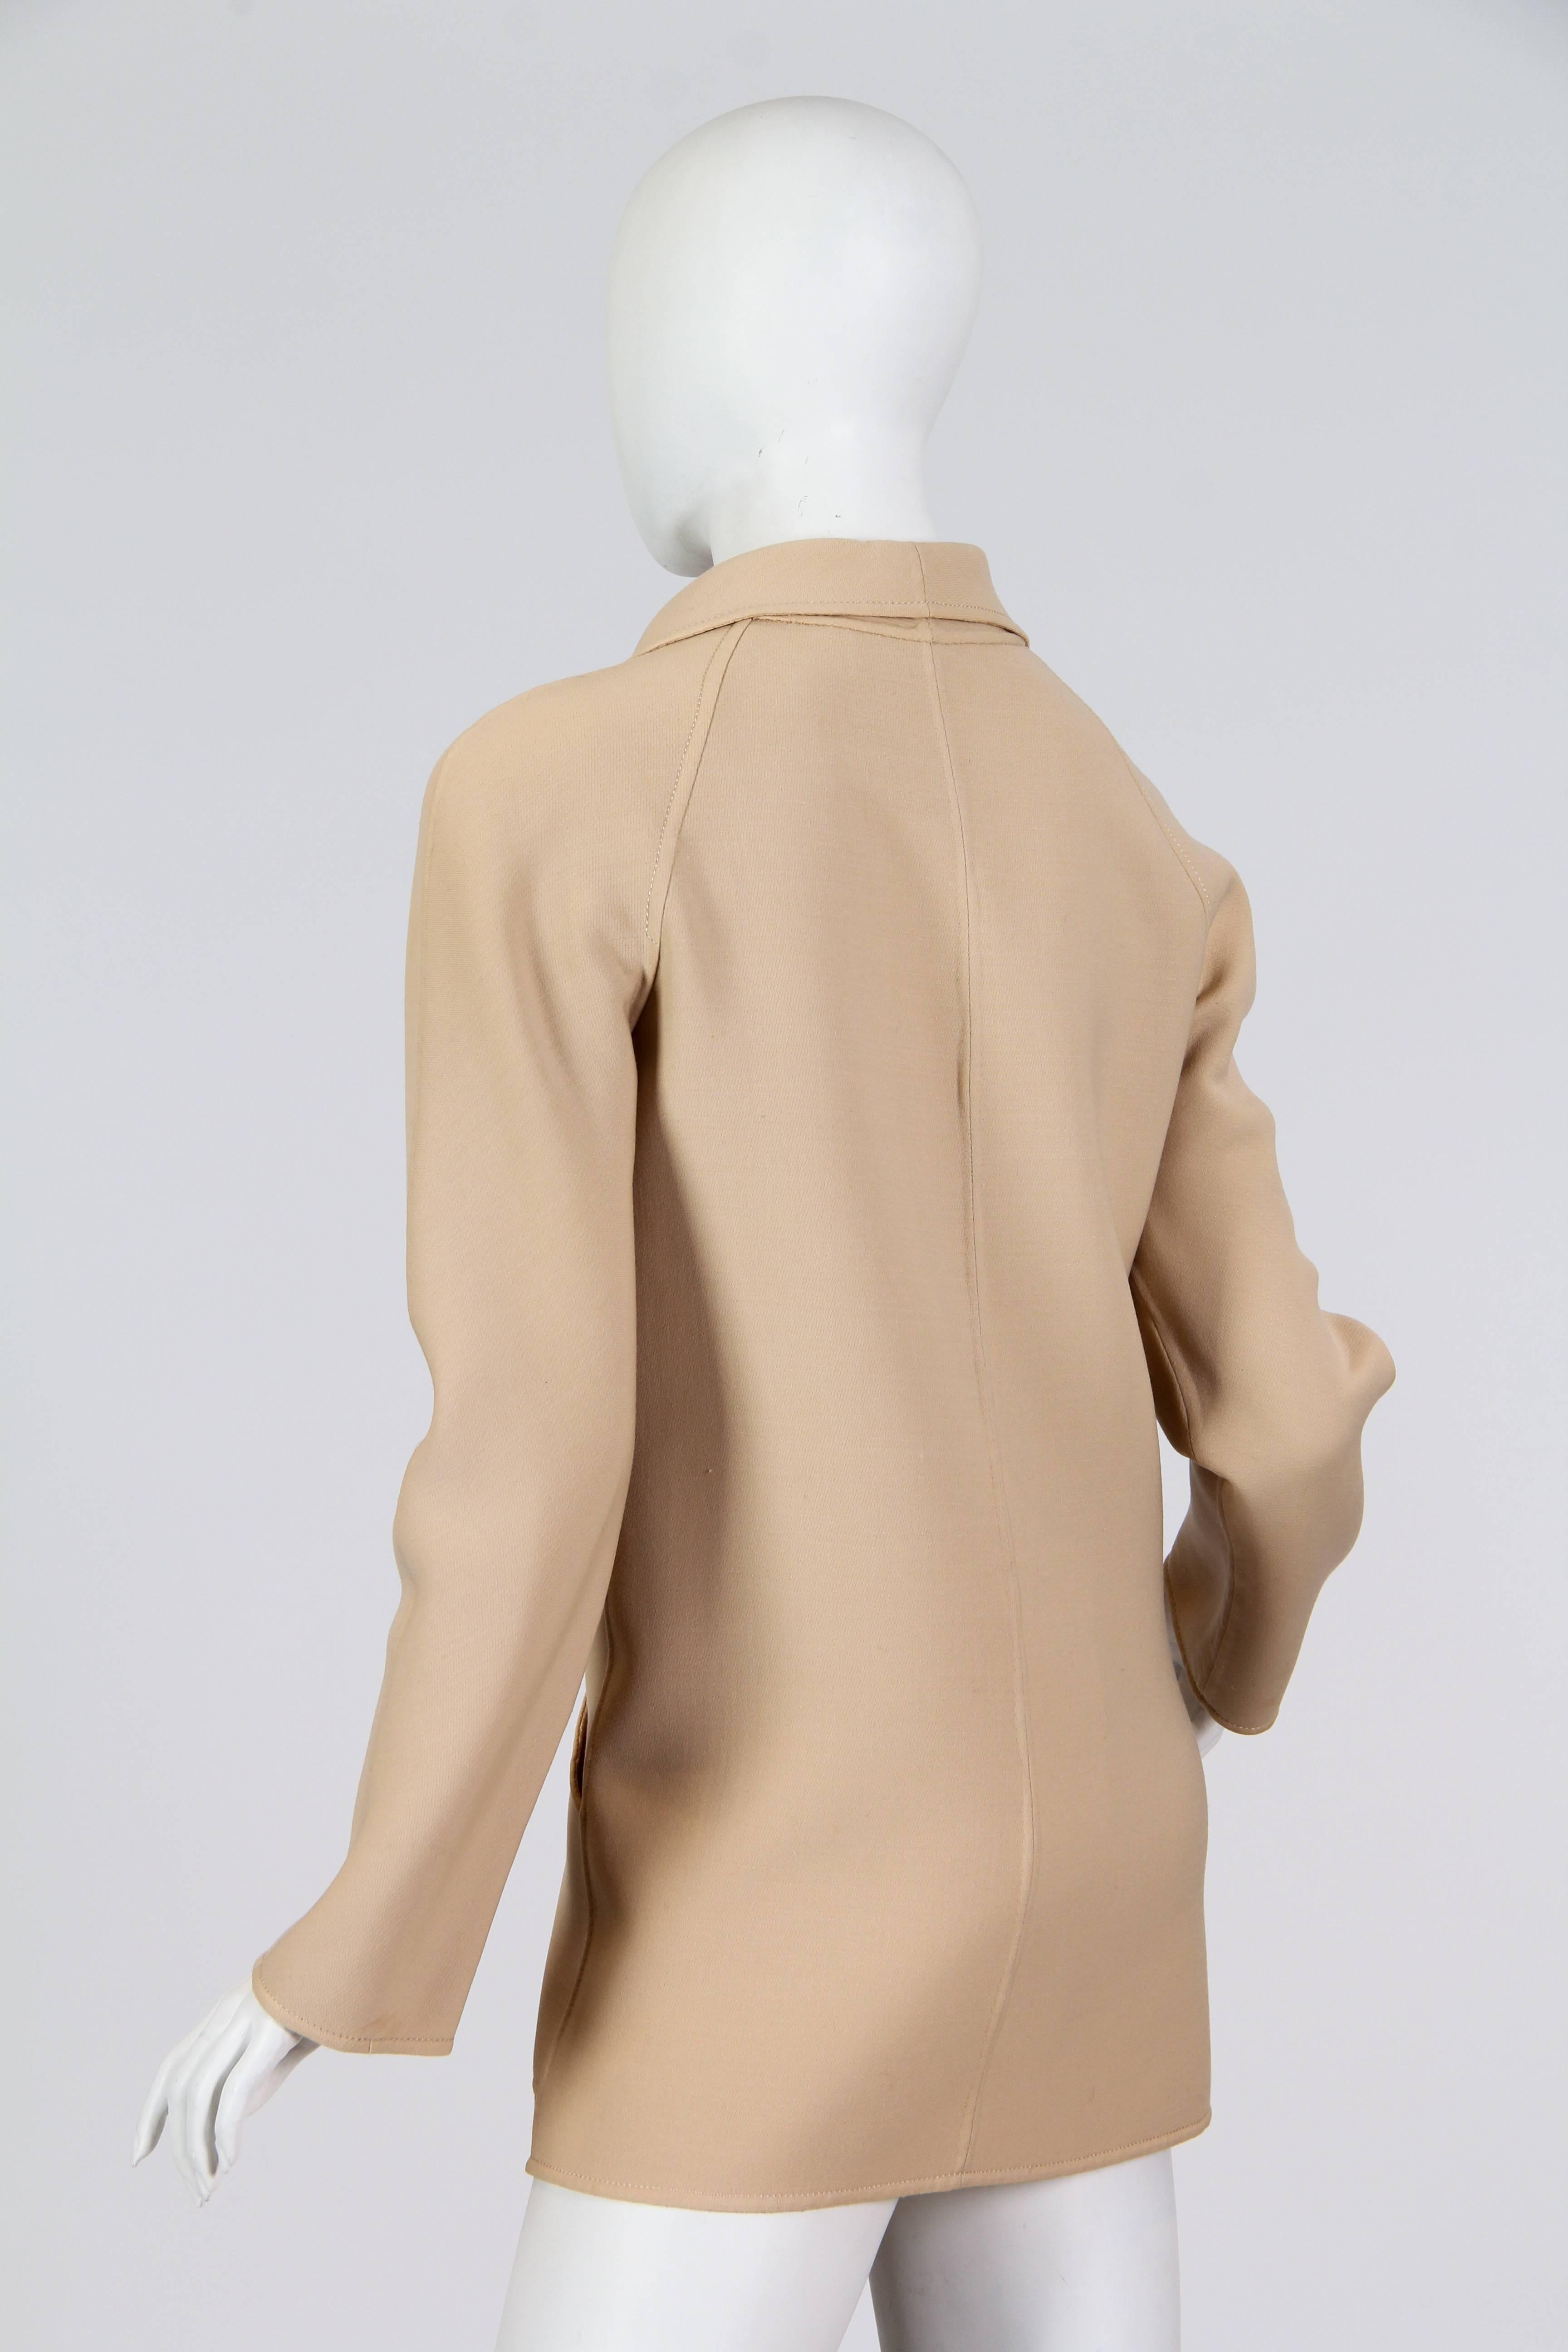 Women's Valentino Couture 1960/70s Lightweight Wool Jacket